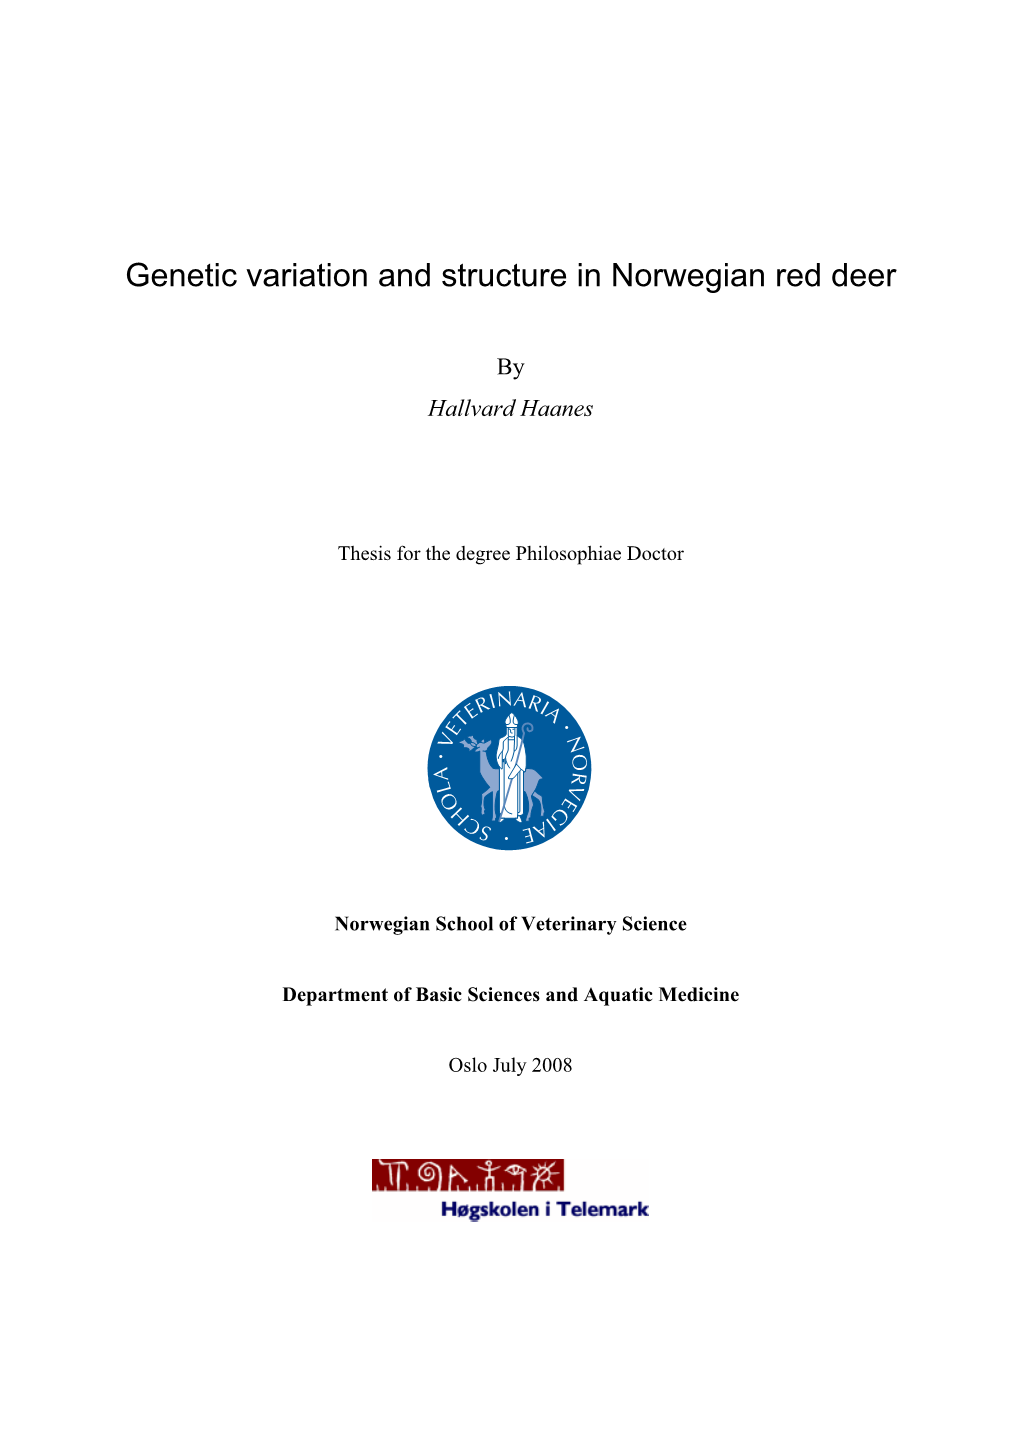 Genetic Variation and Structure in Norwegian Red Deer